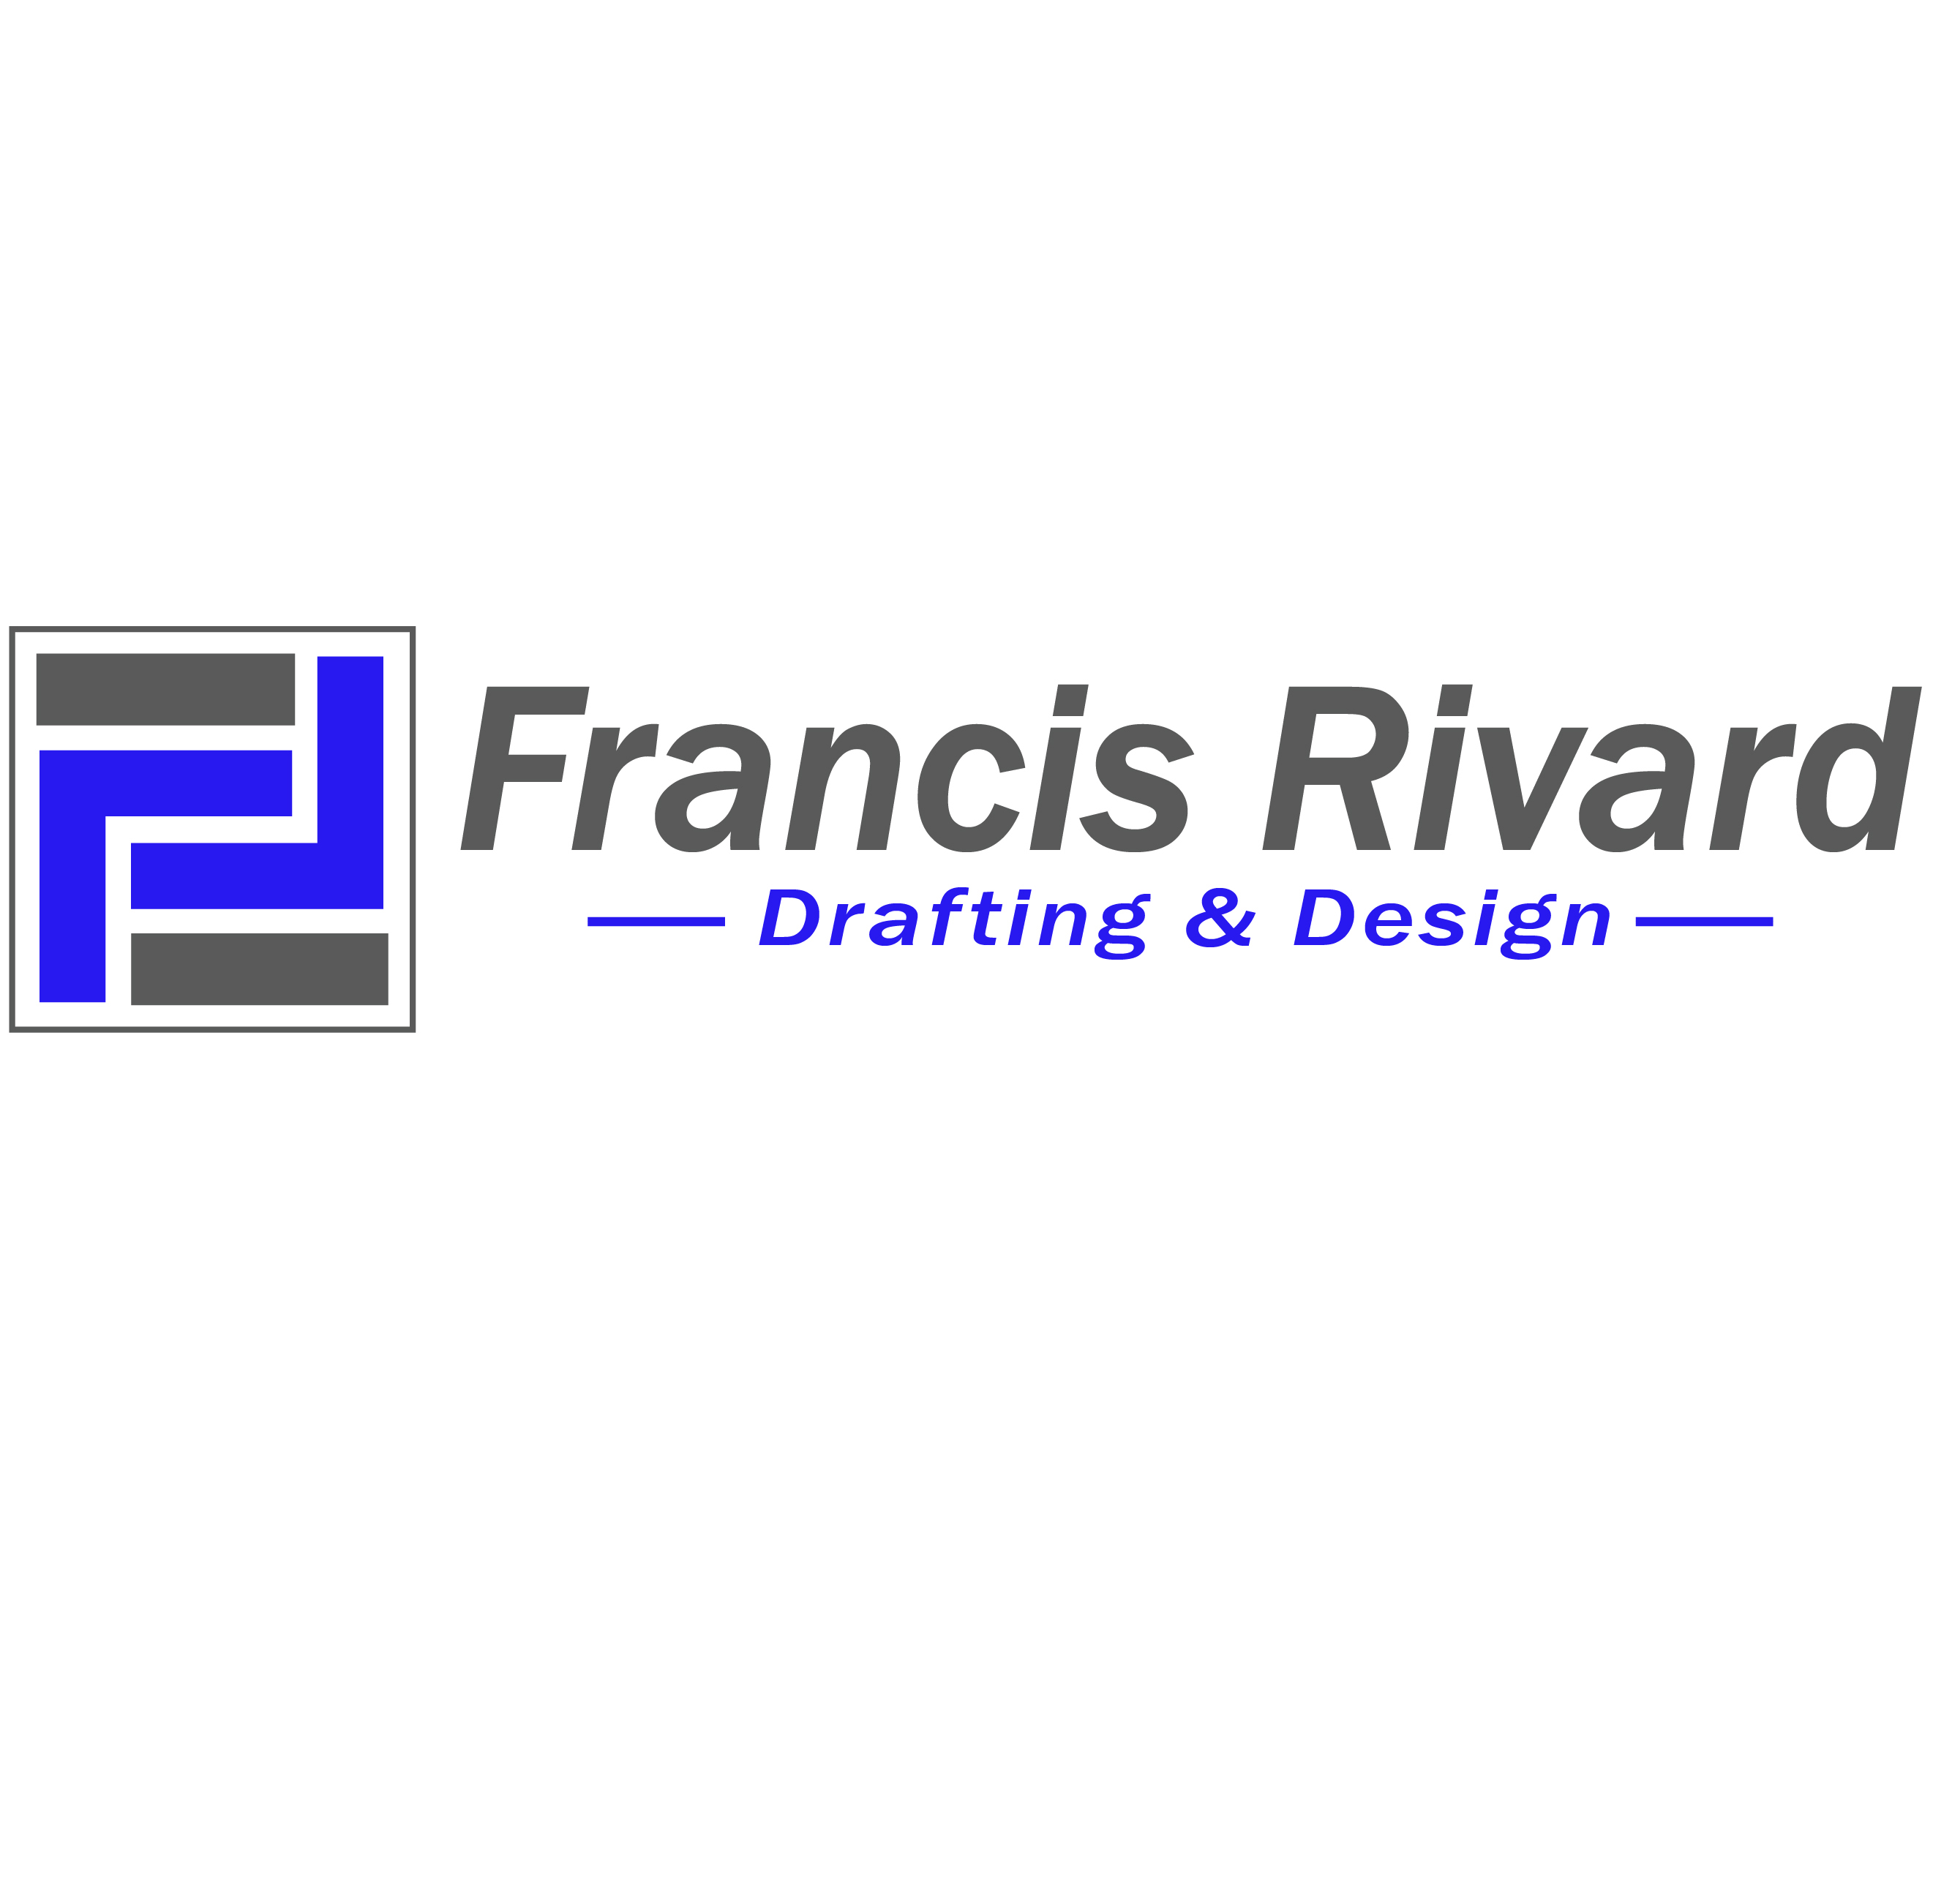 Francis Rivard Drafting & Design